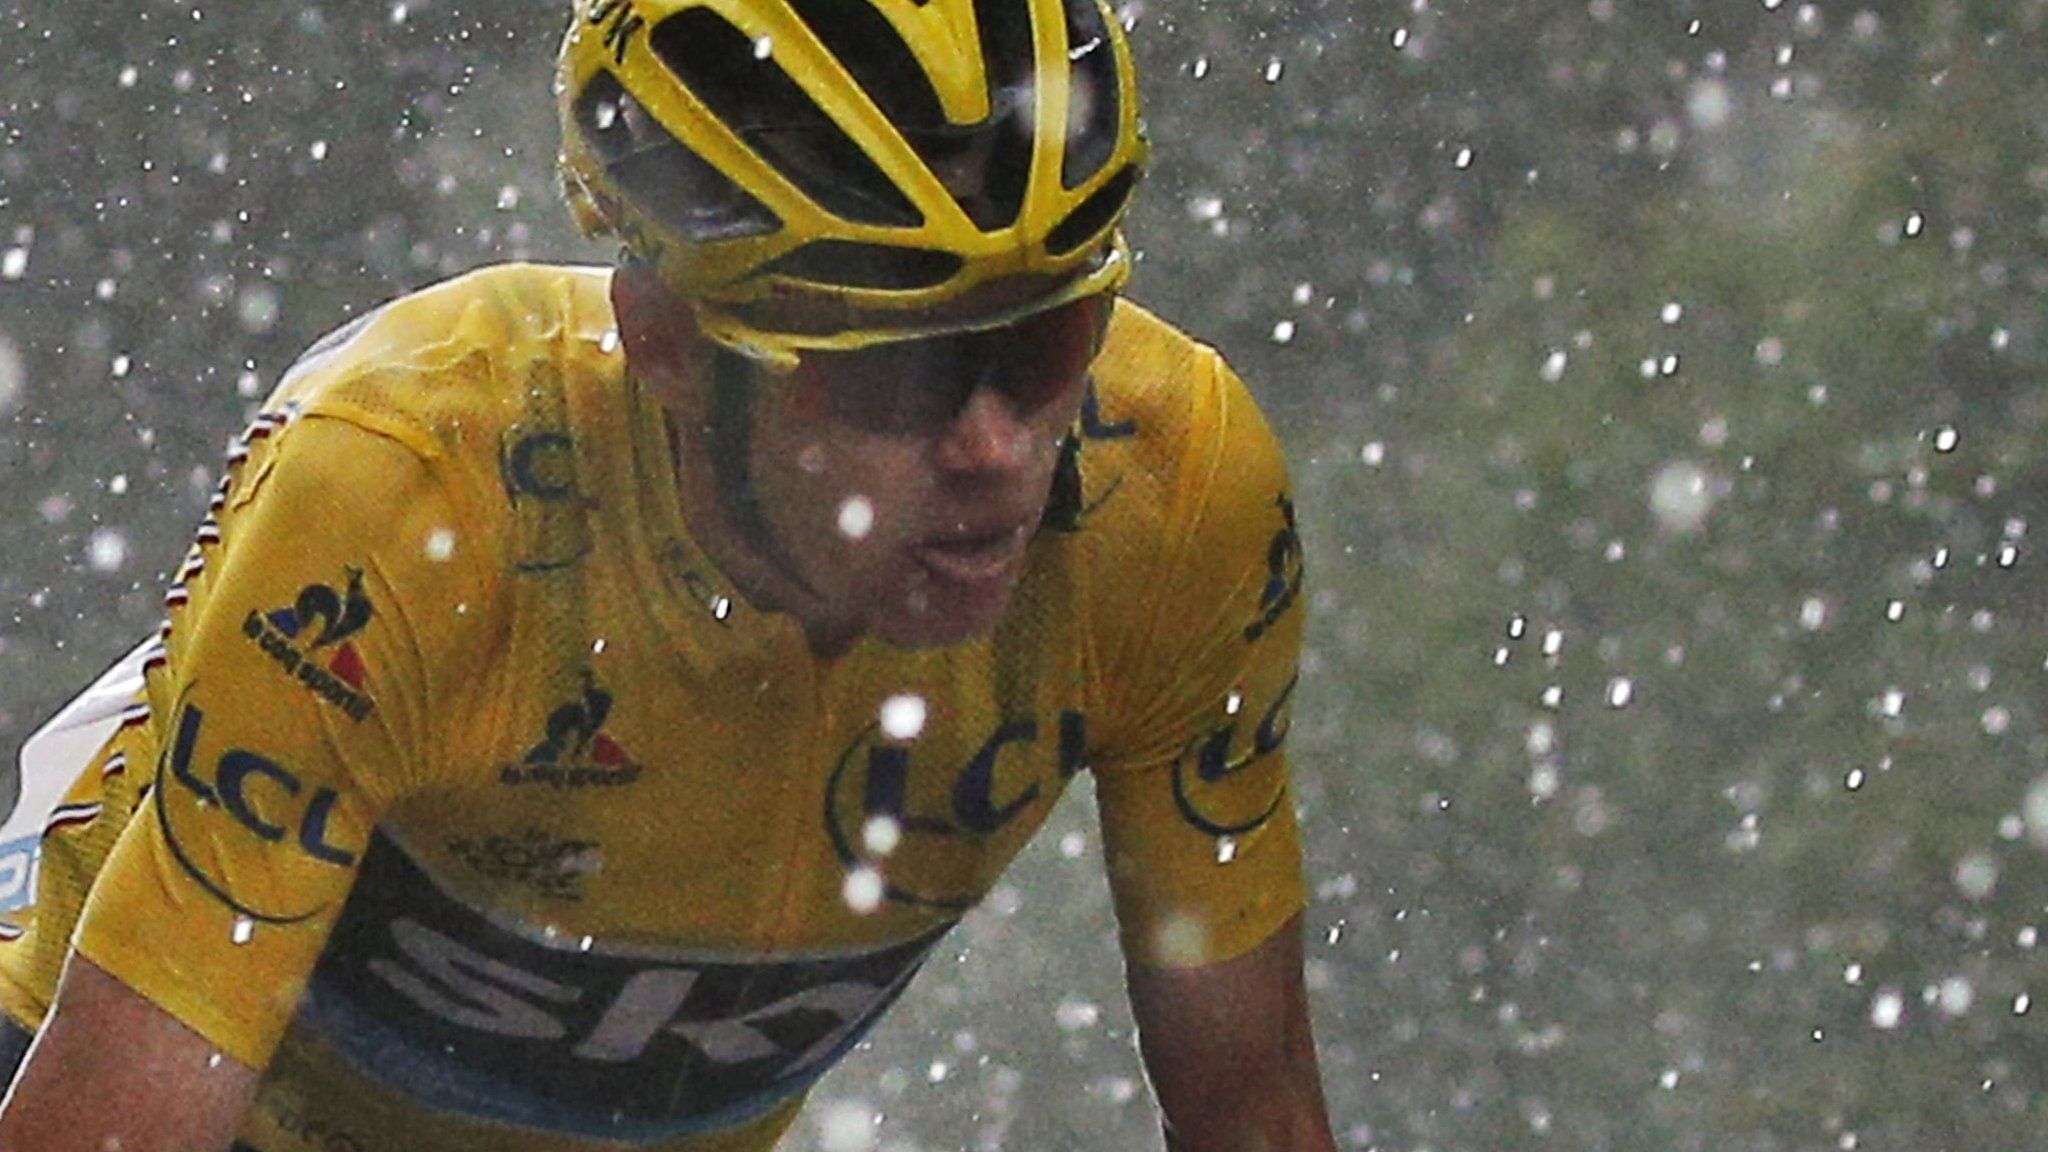 Chris Froome battles through the rain and hail